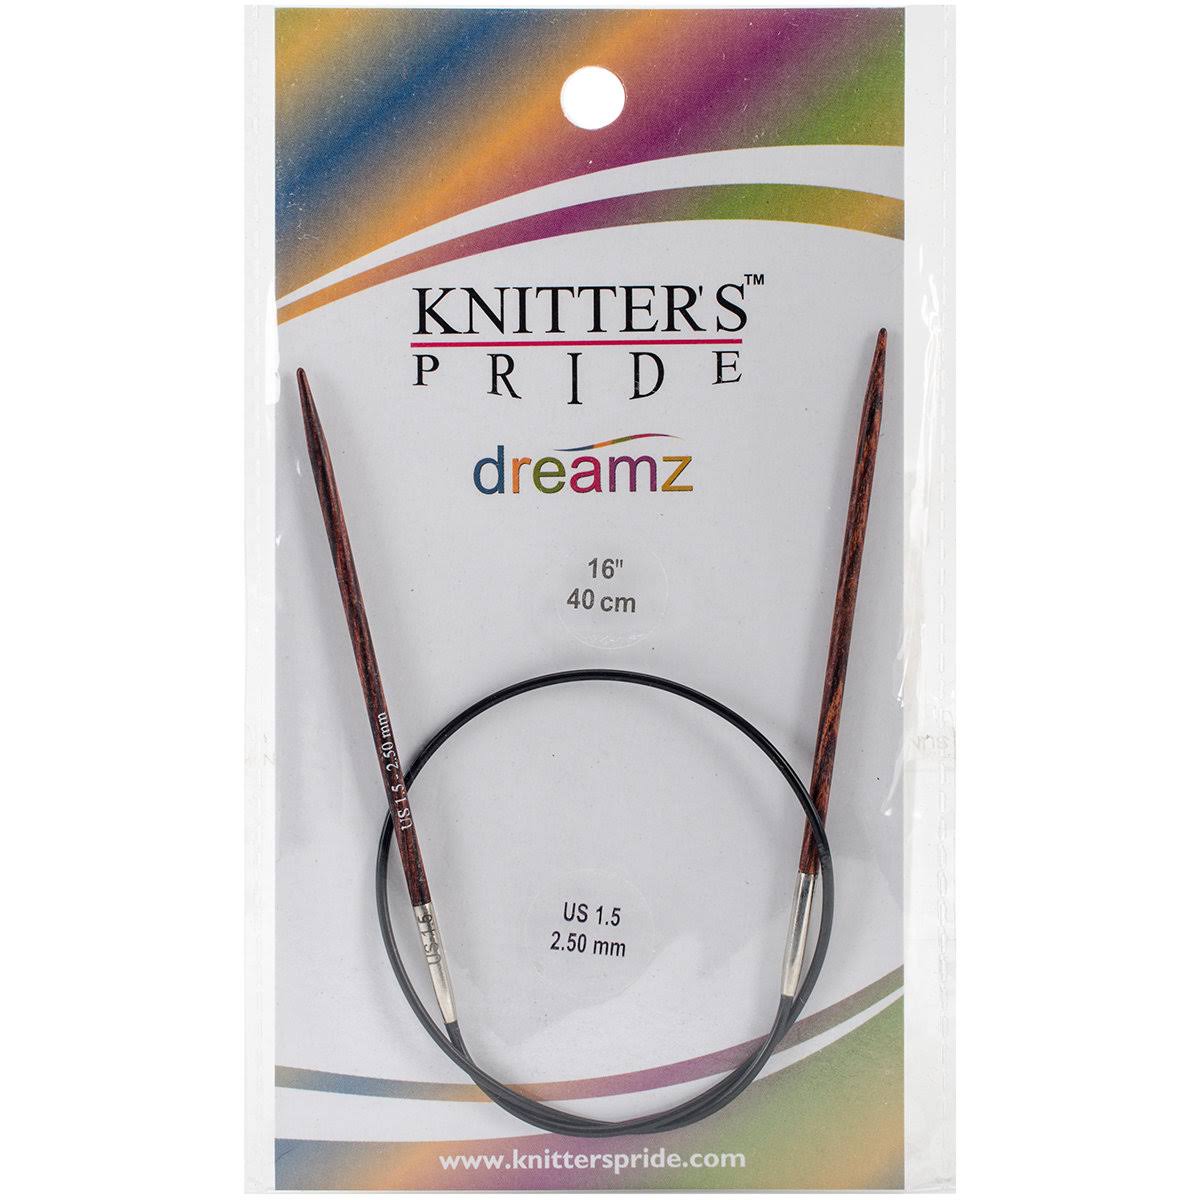 Knitters Pride Dreamz Fixed Circular Needles - 16"